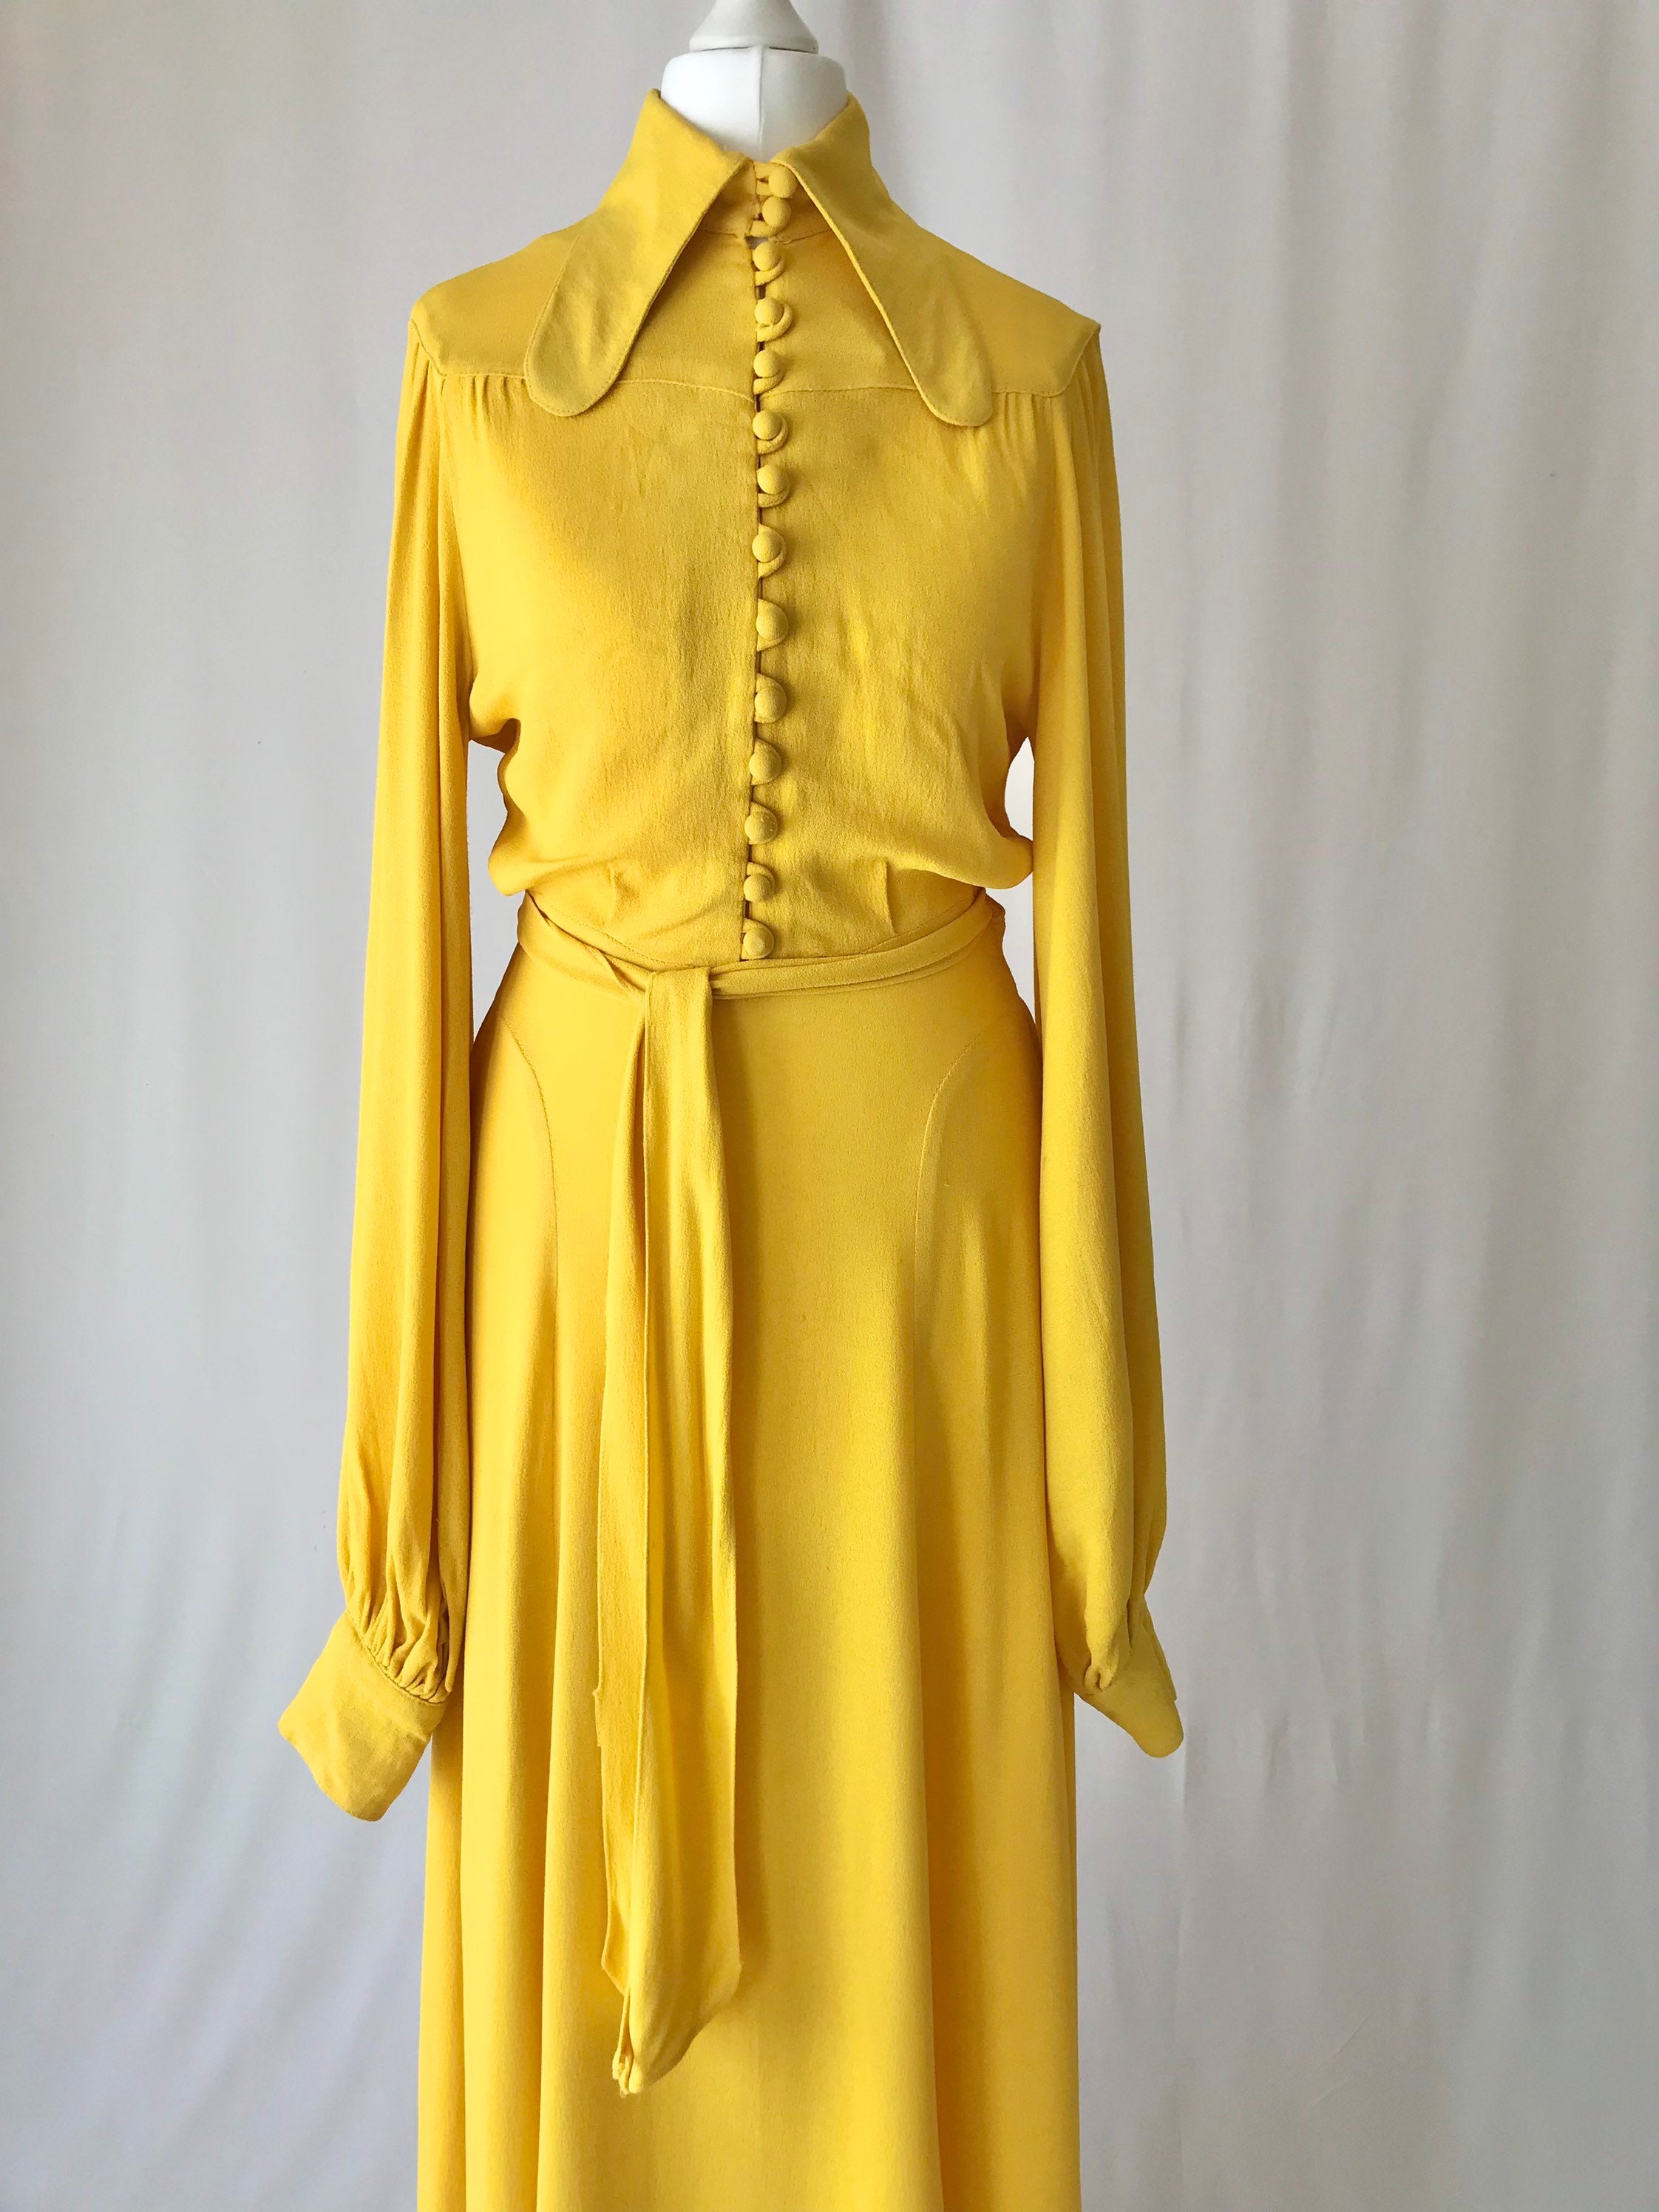 Stunning Original 1970 Ossie Clark Maxi Dress in Canary Yellow Moss ...